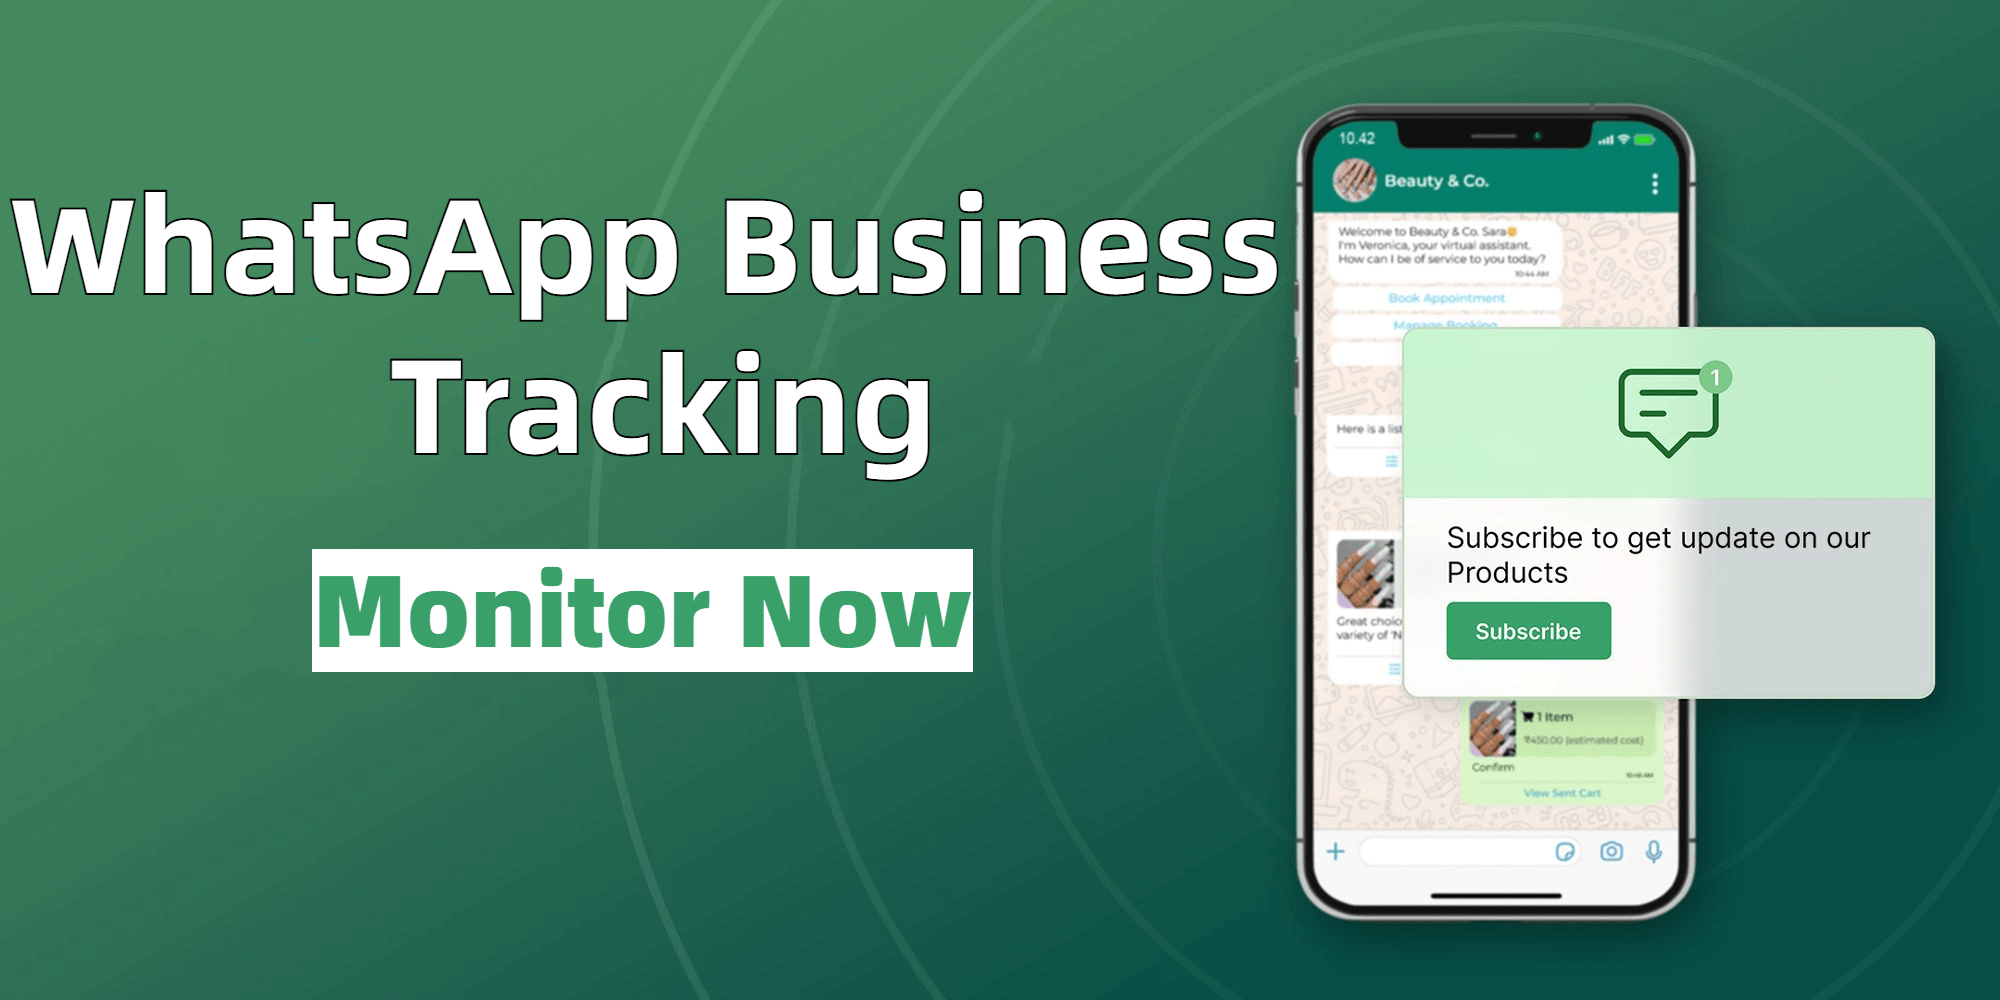 WhatsApp Business tracking